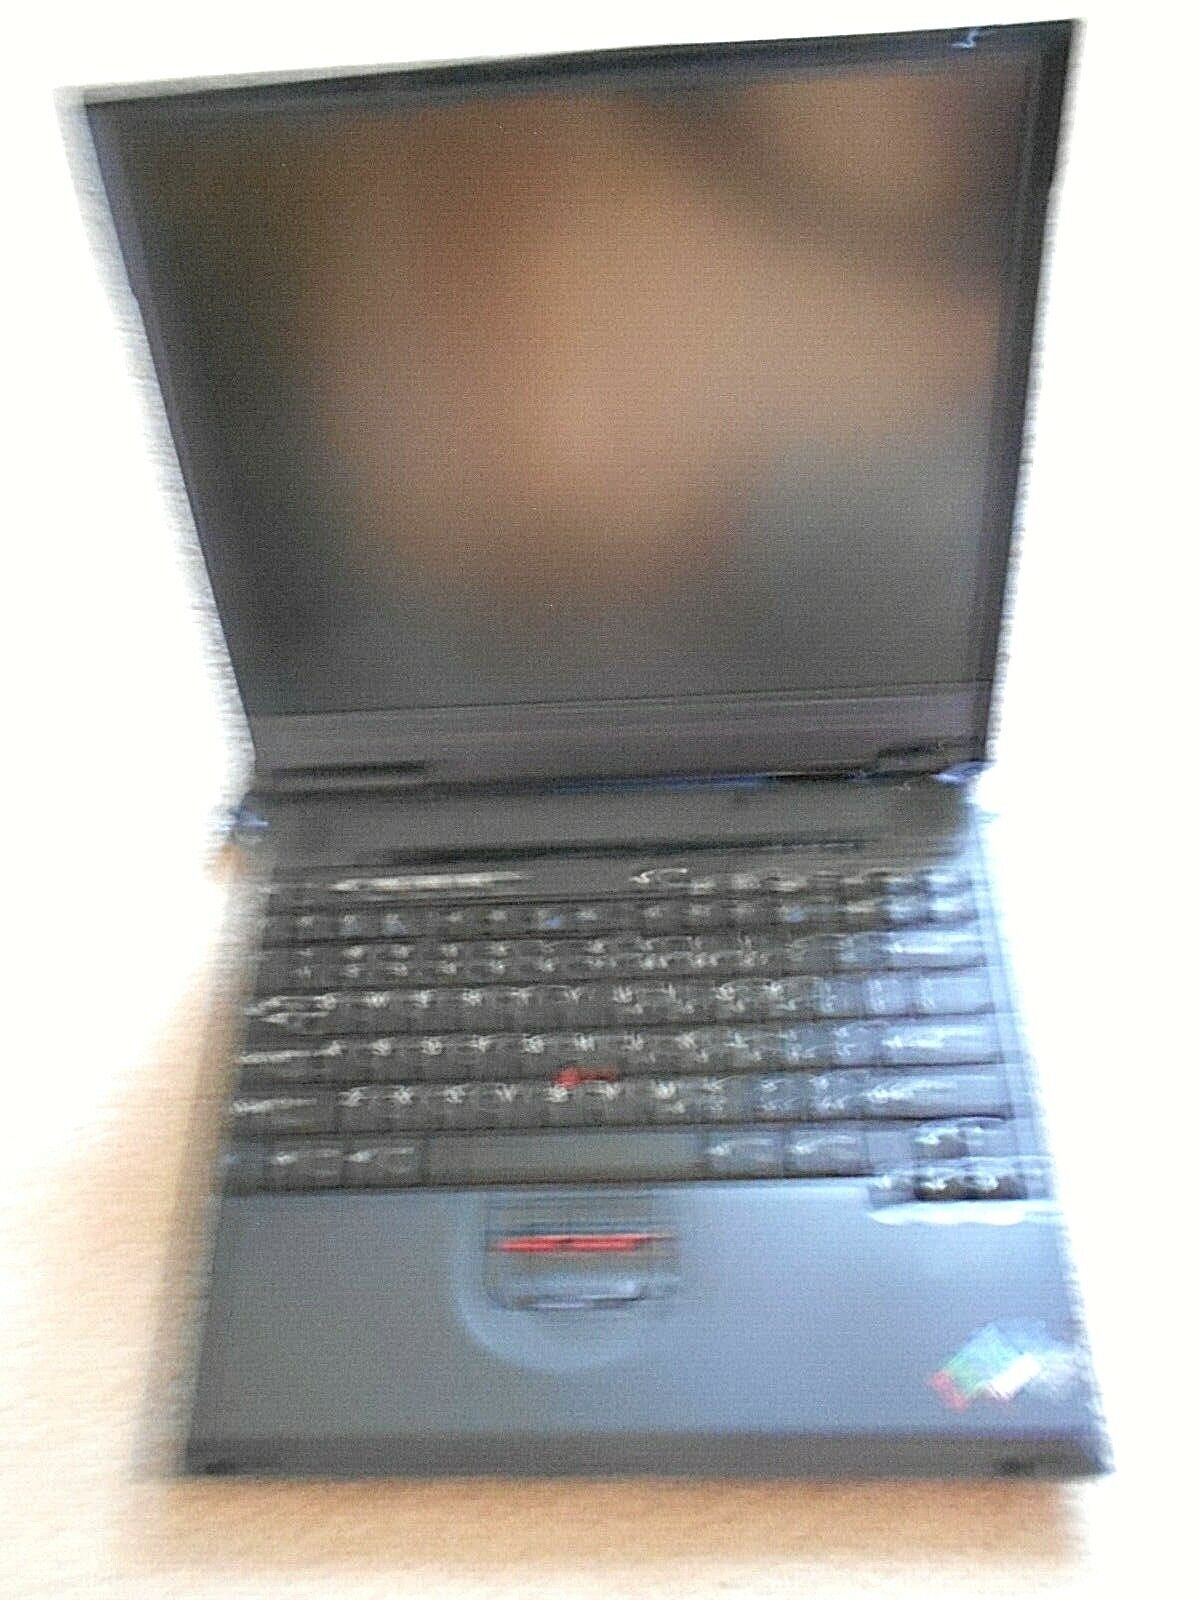 IBM ThinkPad Windows XP Pro Laptop Computer w/AC Adapter w/case